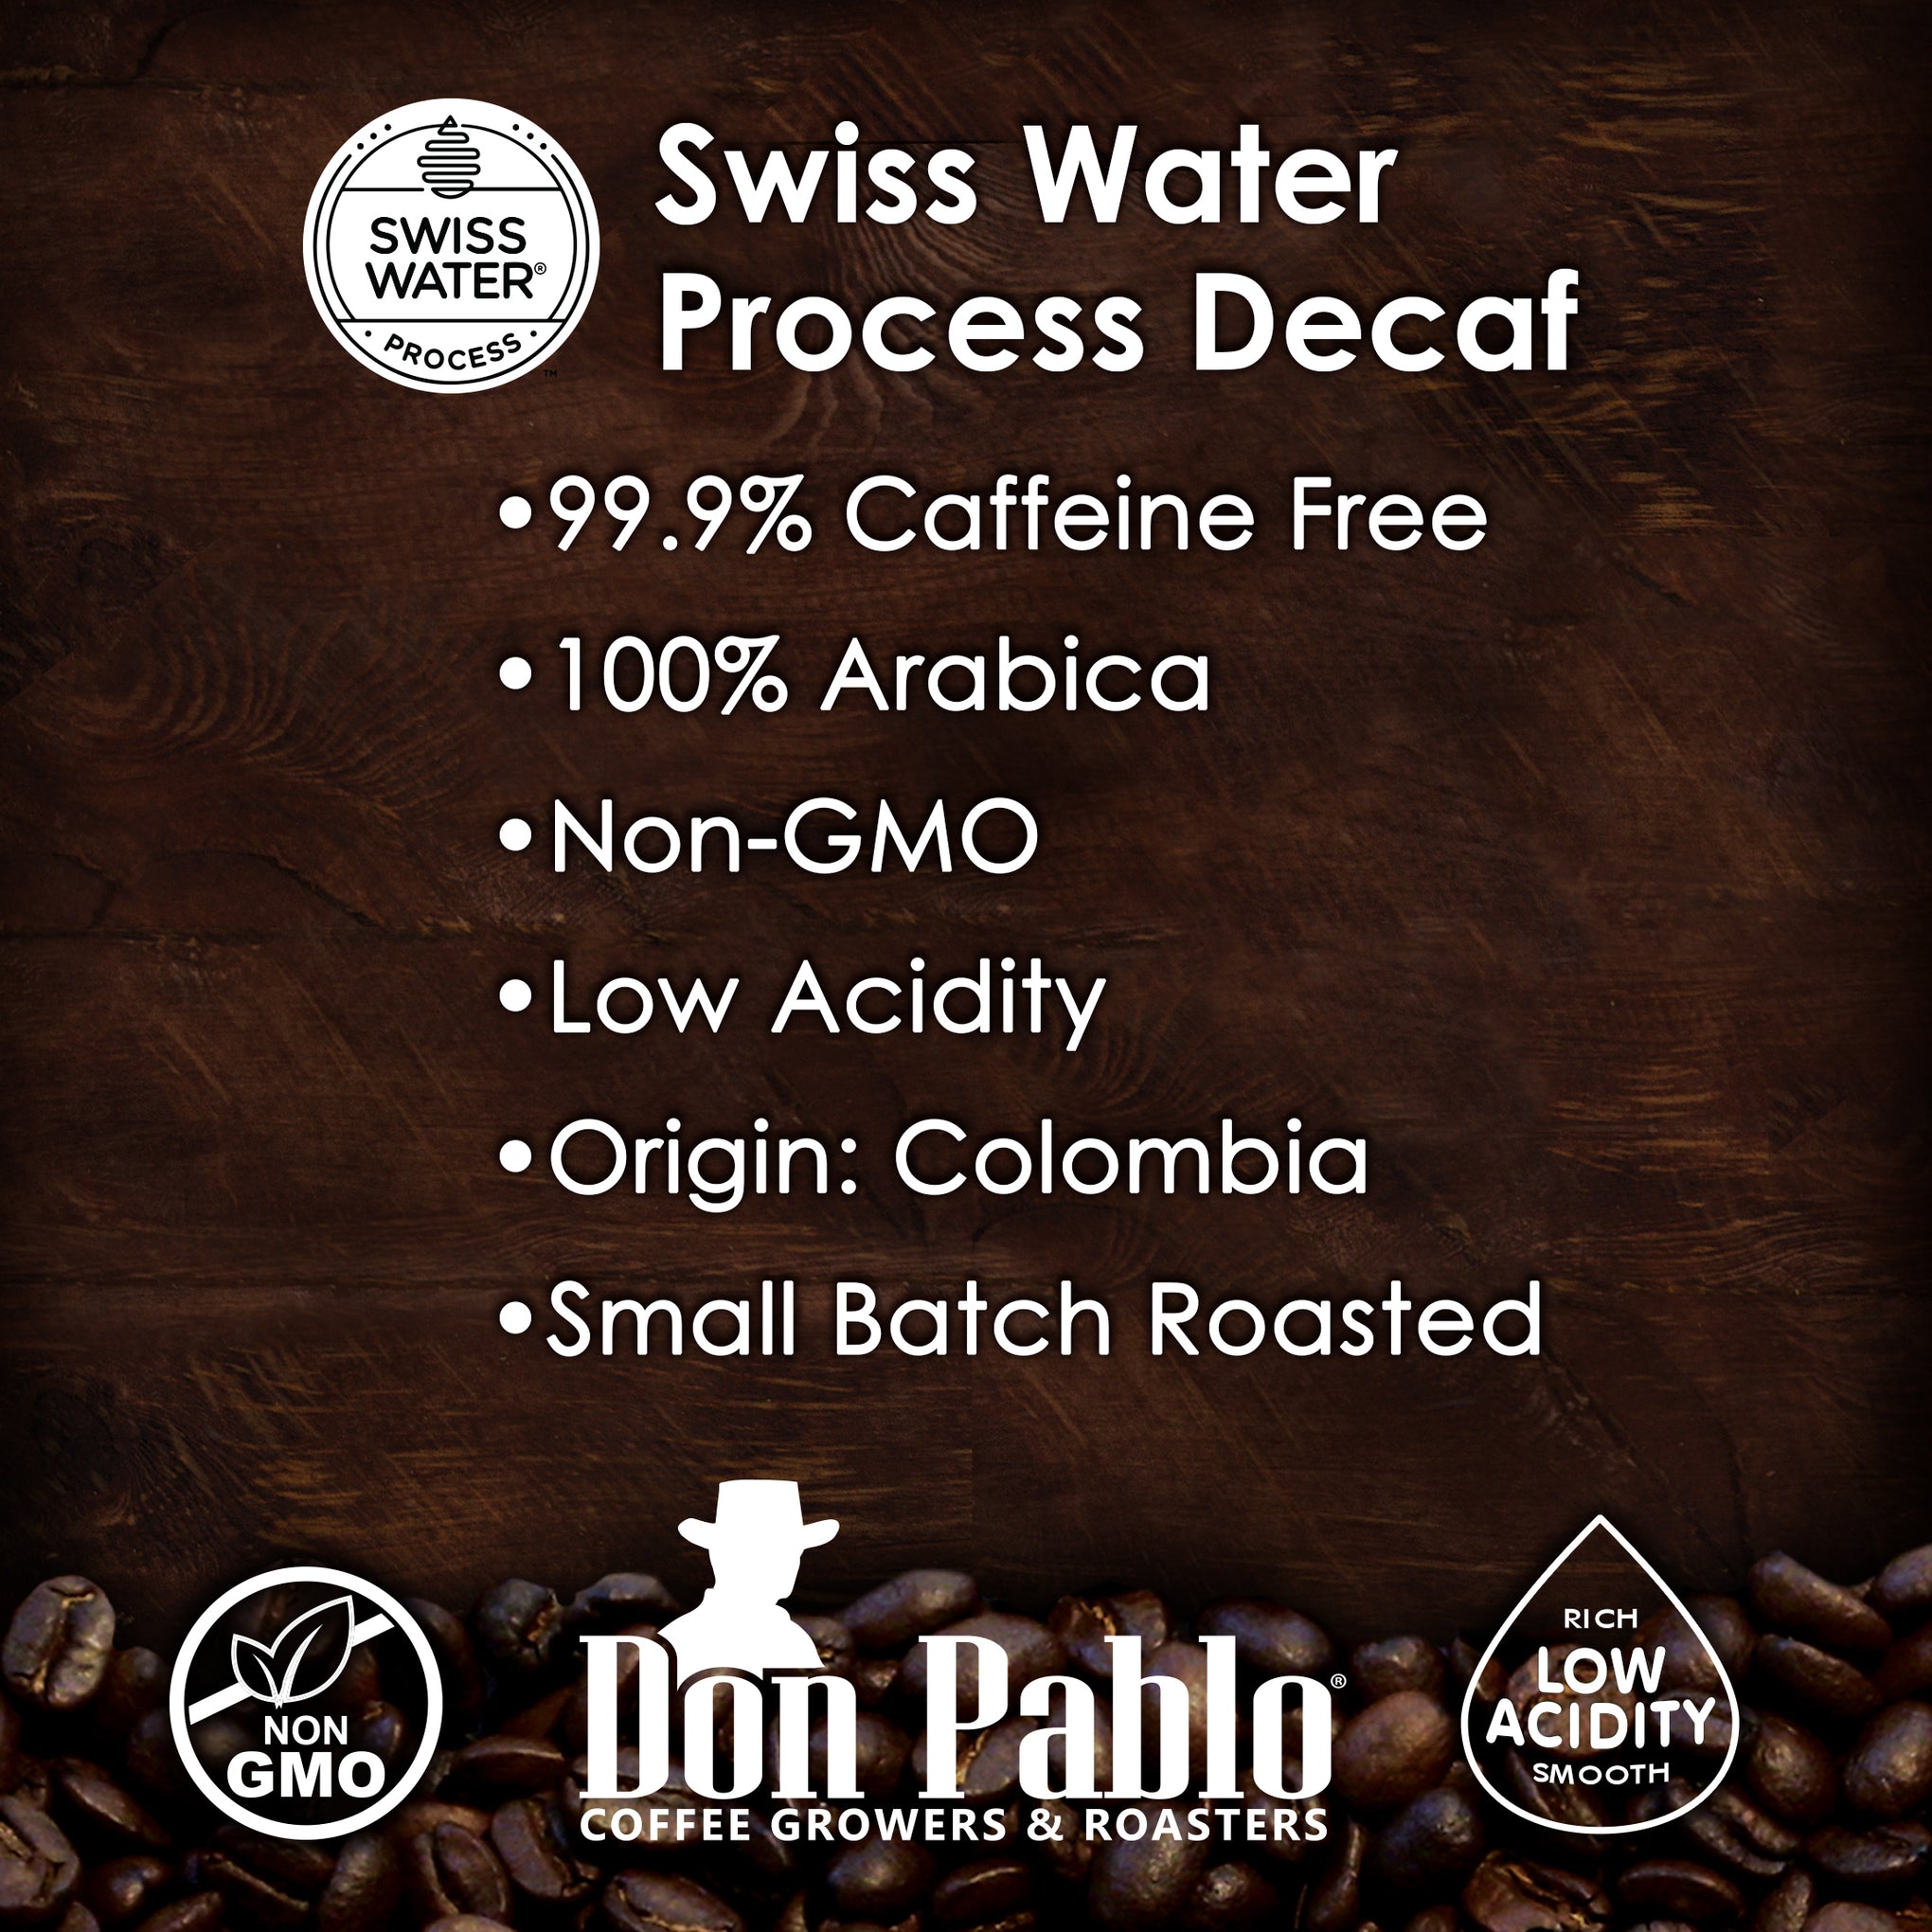 Don Pablo Medium-Dark Roast Specialty Coffee